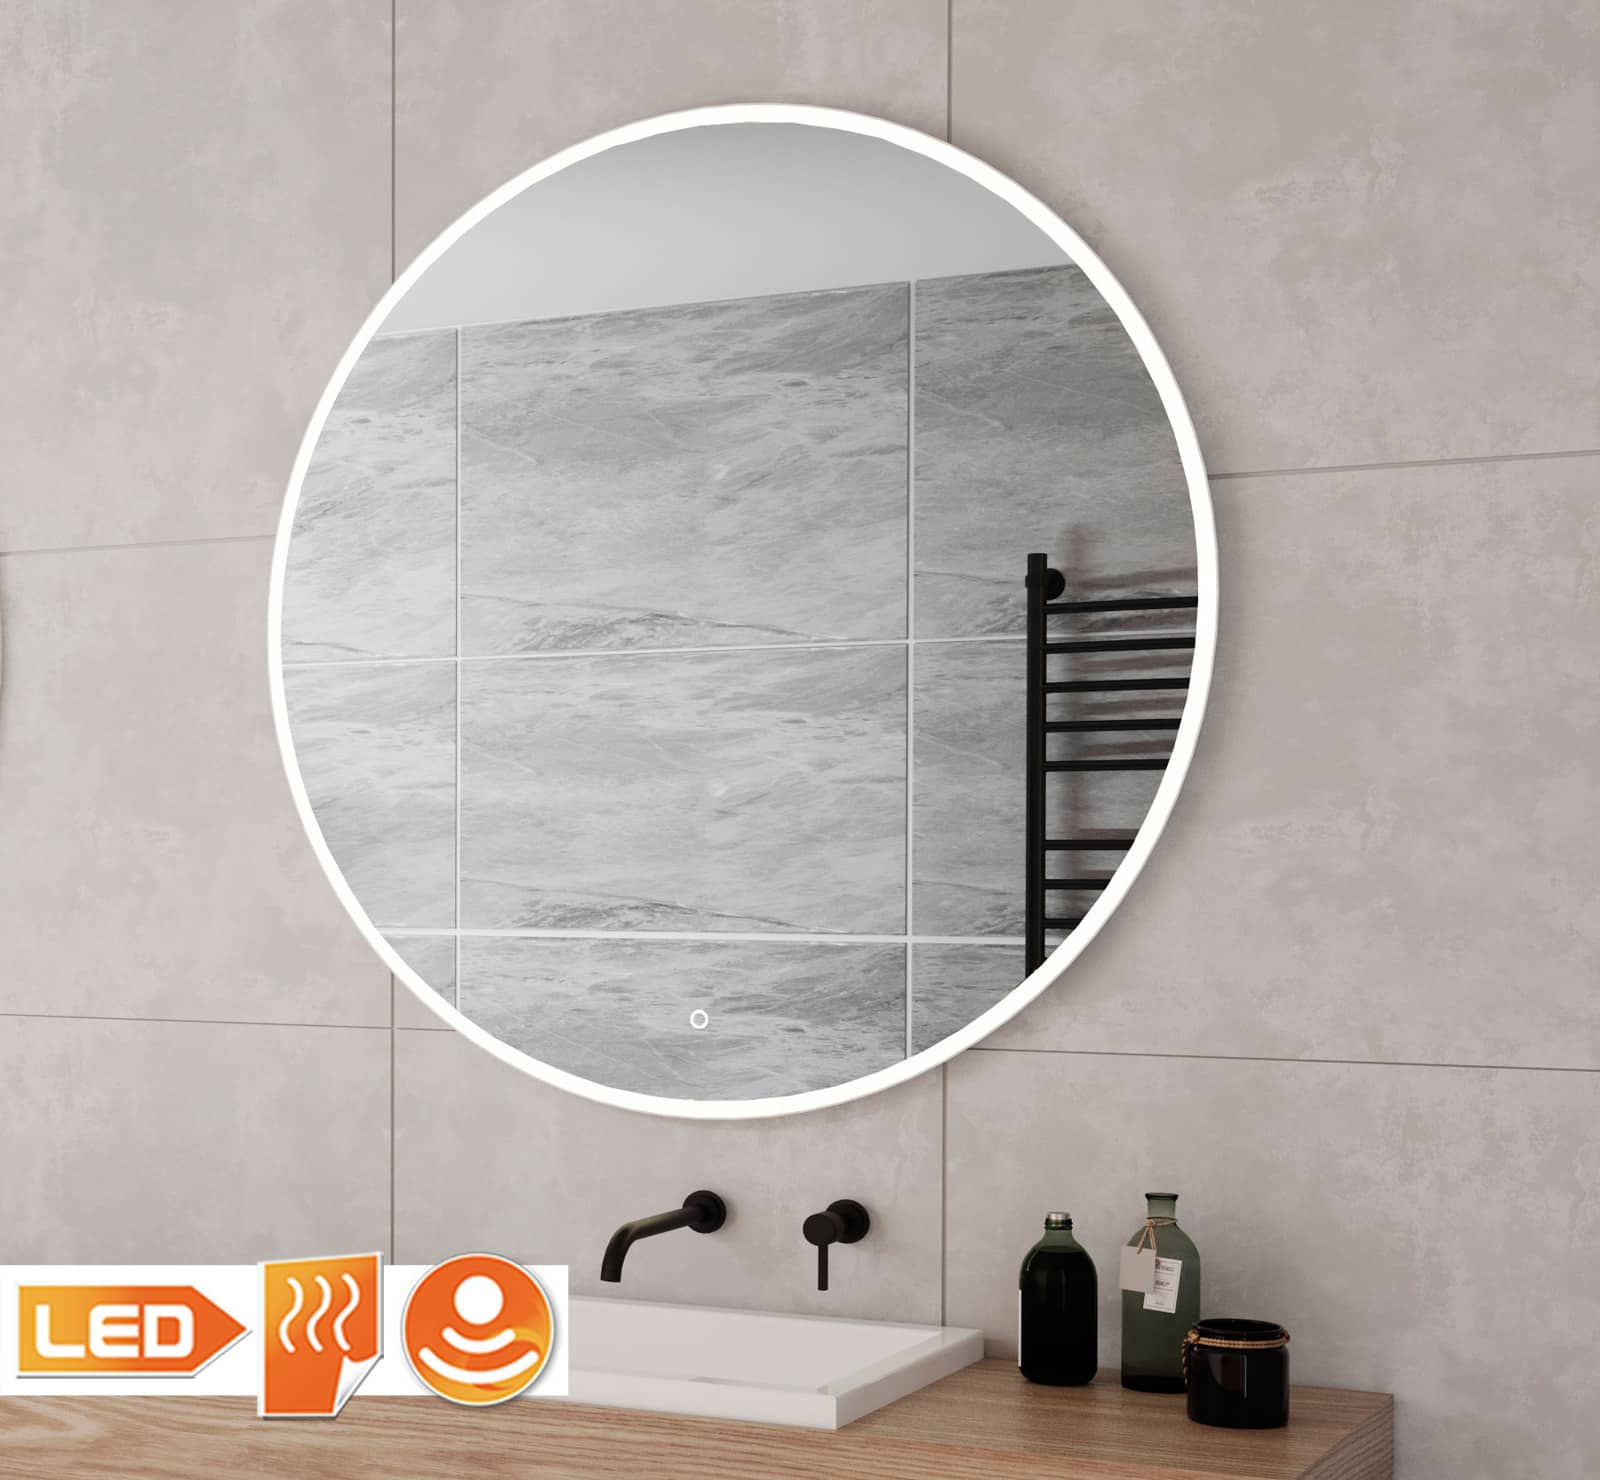 Ronde badkamerspiegel met LED verlichting, verwarming, touch dimfunctie en wit frame 60x60 cm - Designspiegels